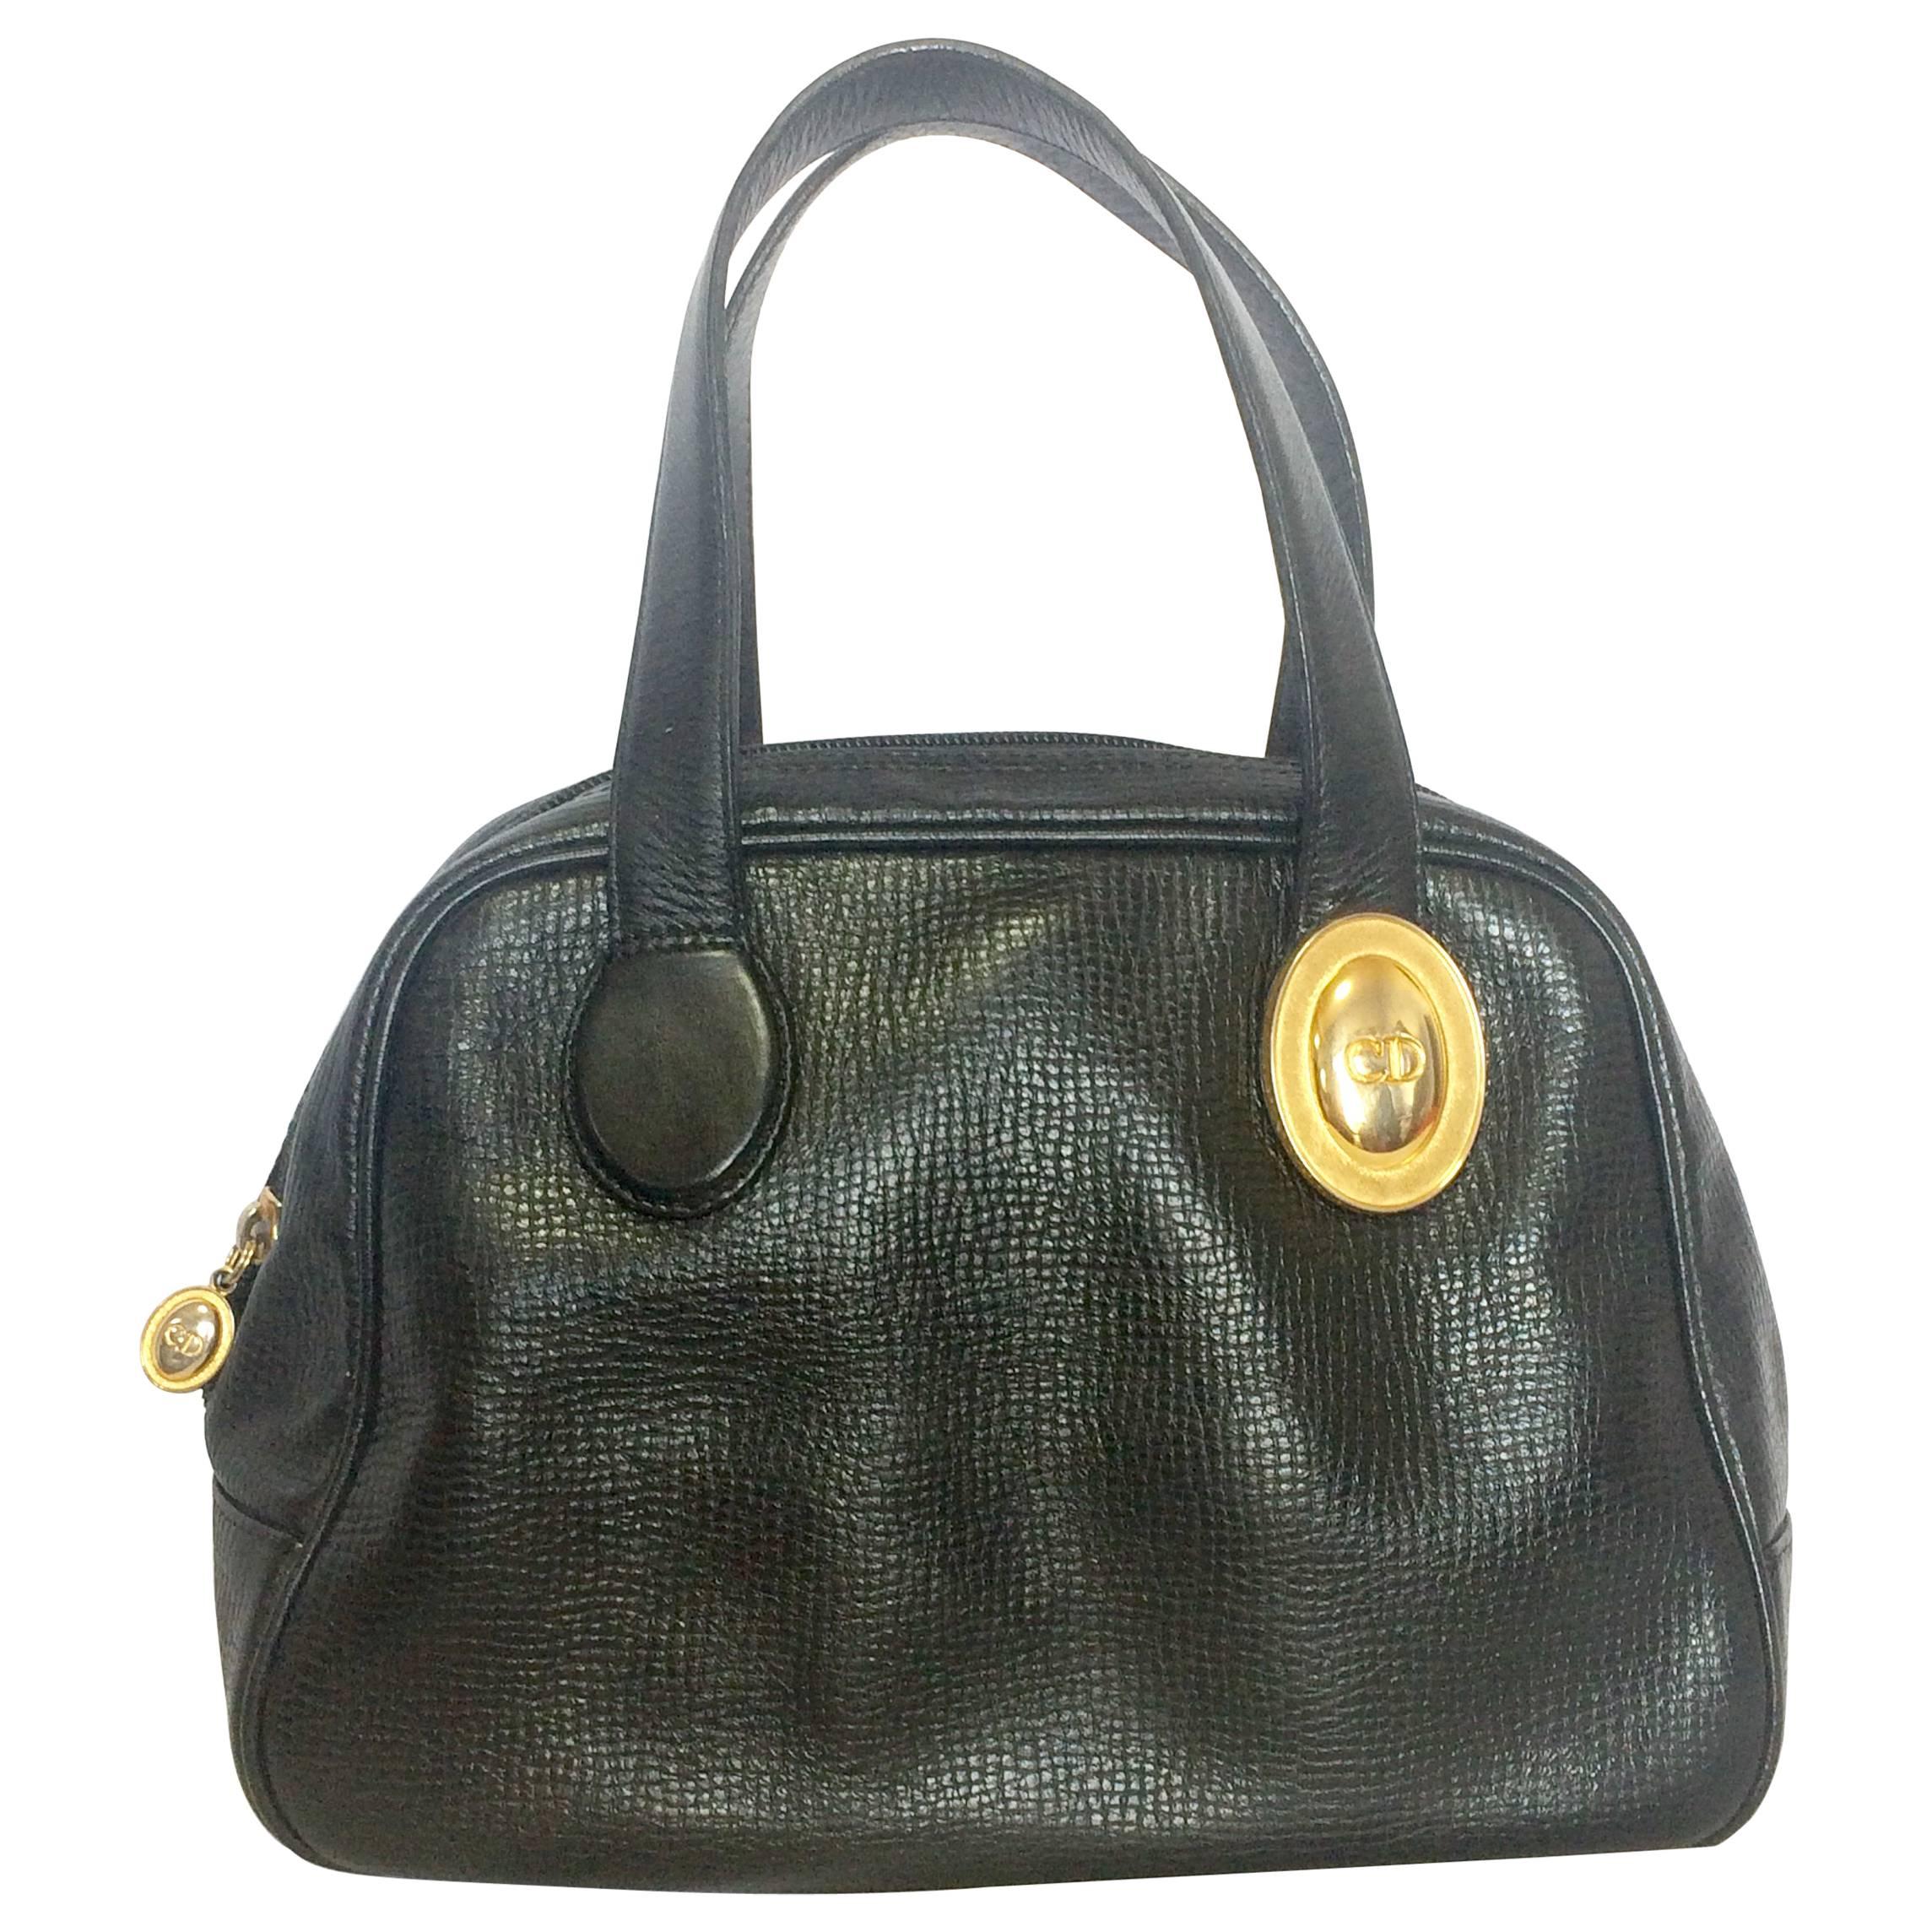 Vintage Christian Dior black leather mini bolide style handbag with logo motif.